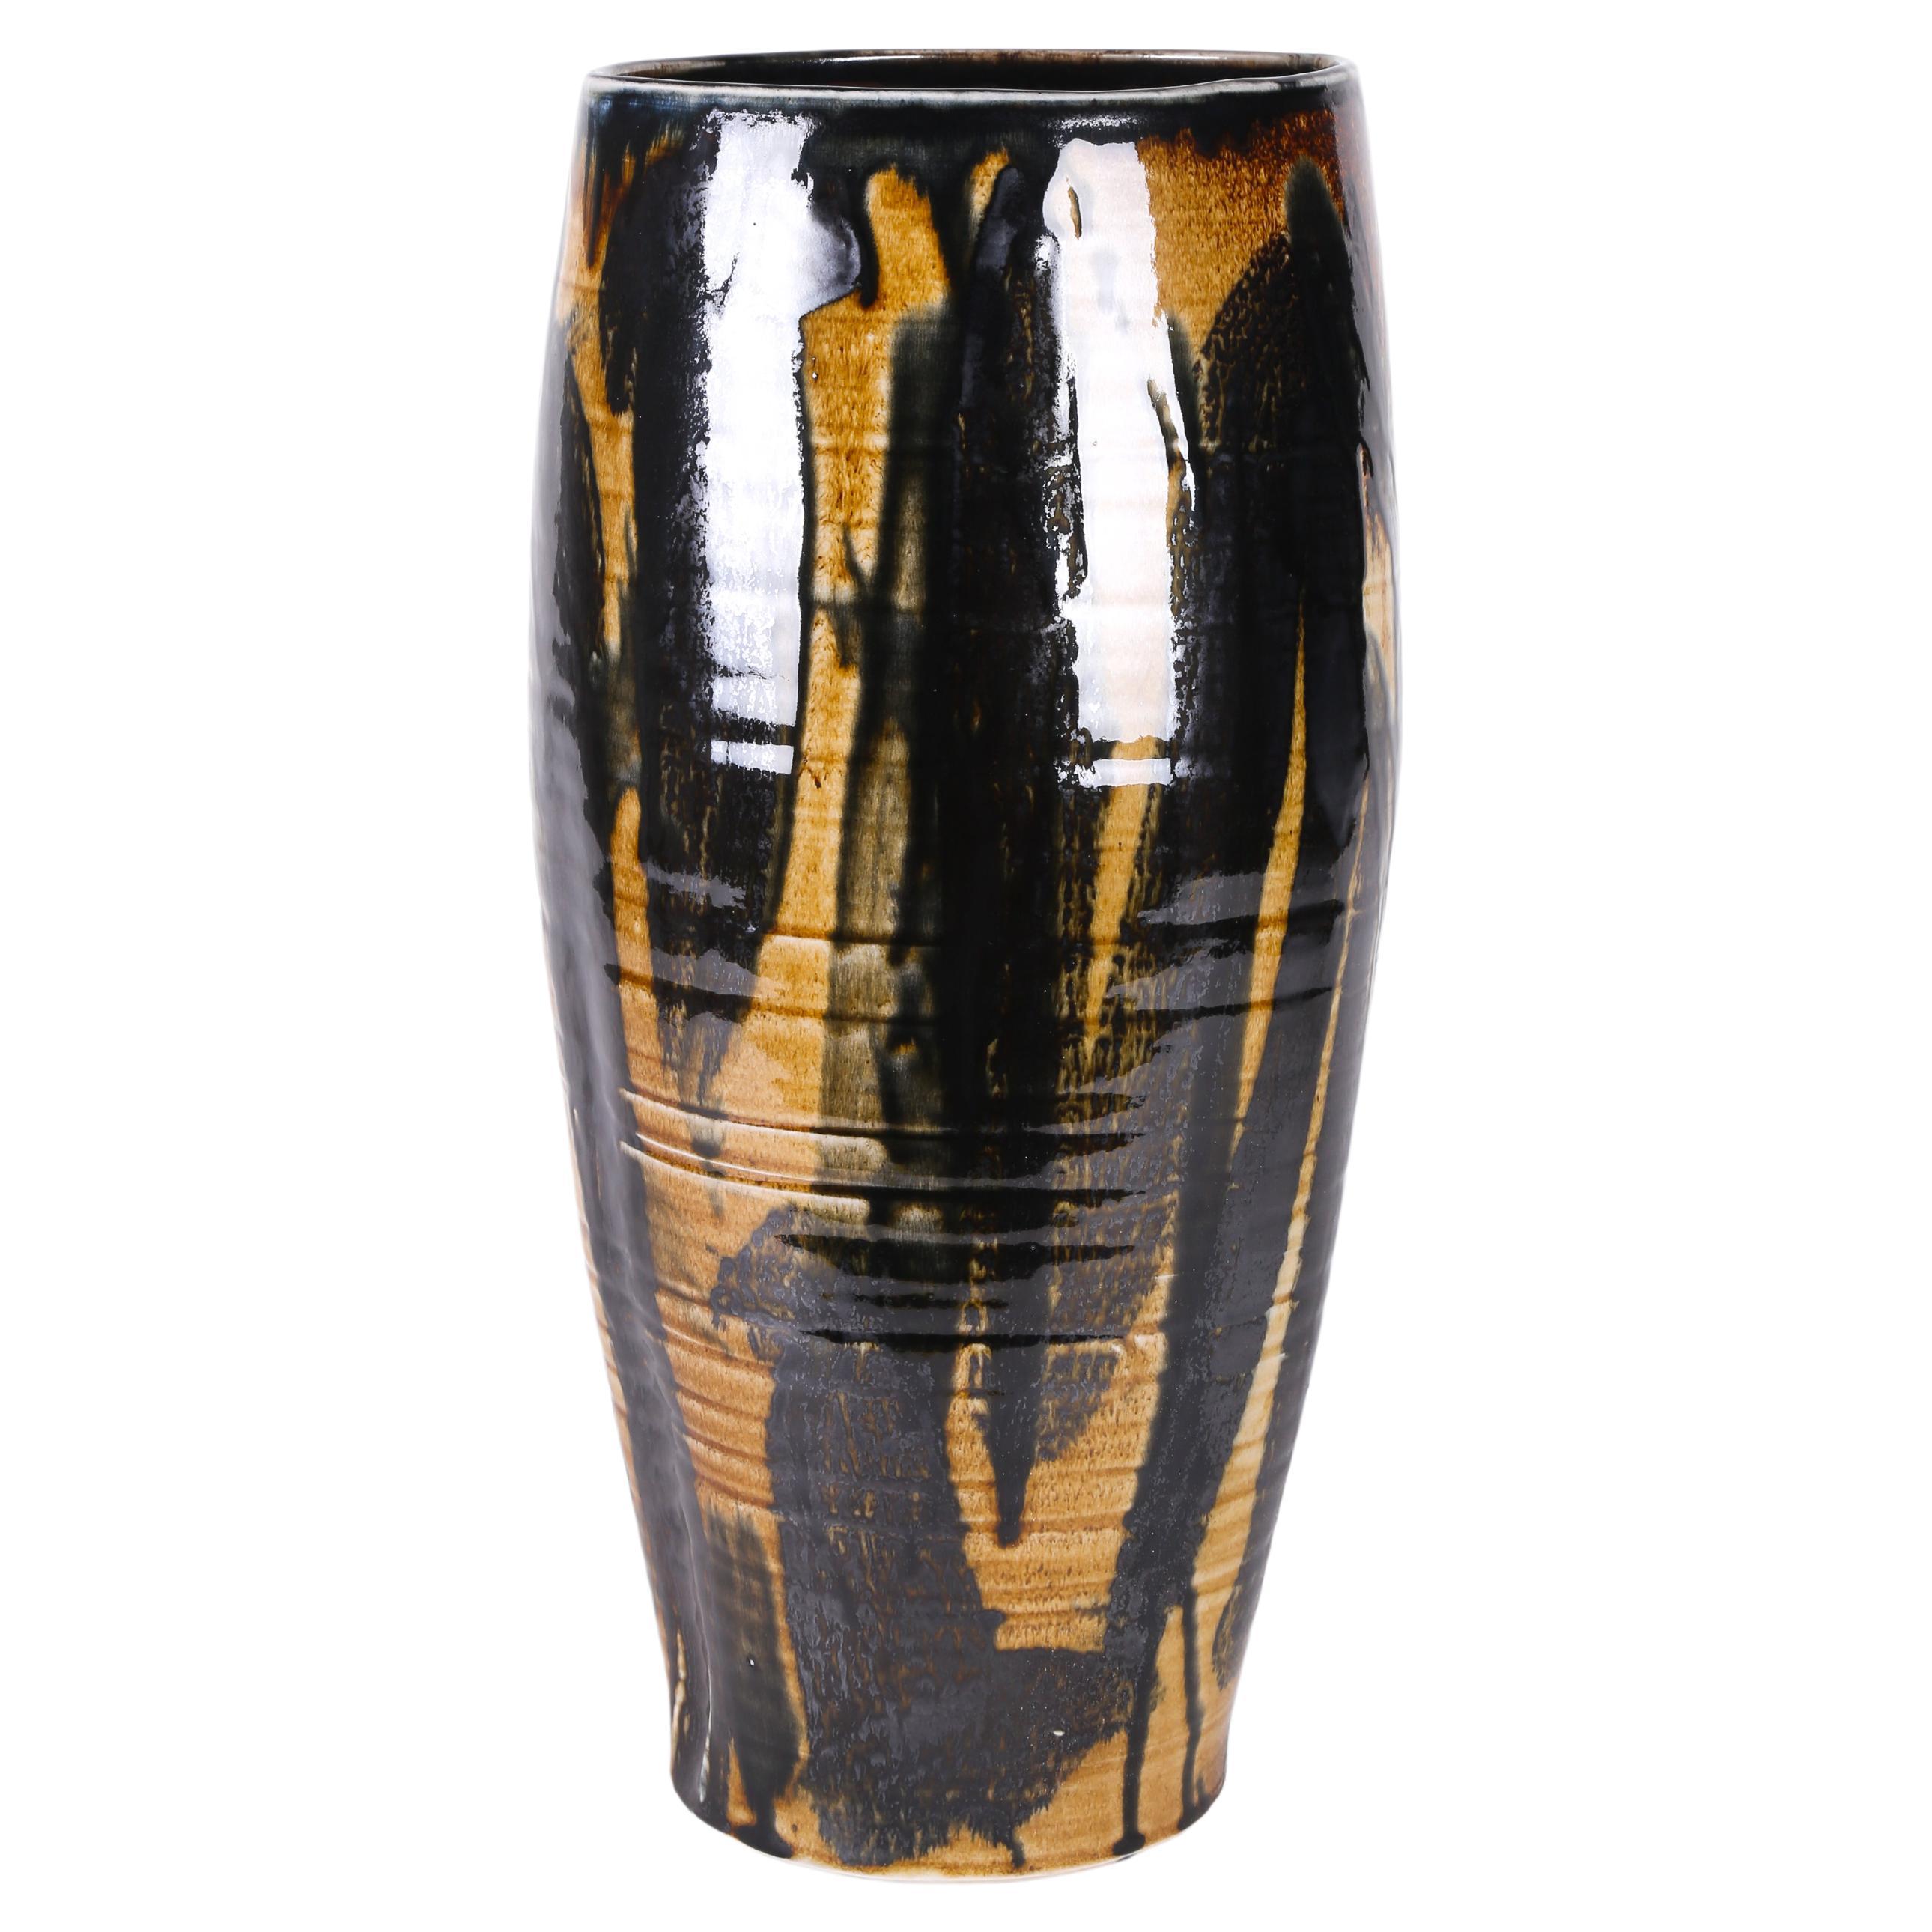 Brown Ceramic Vase, Ebitenyefa Baralaye, Modern Handmade Decorative Ceramic Vase